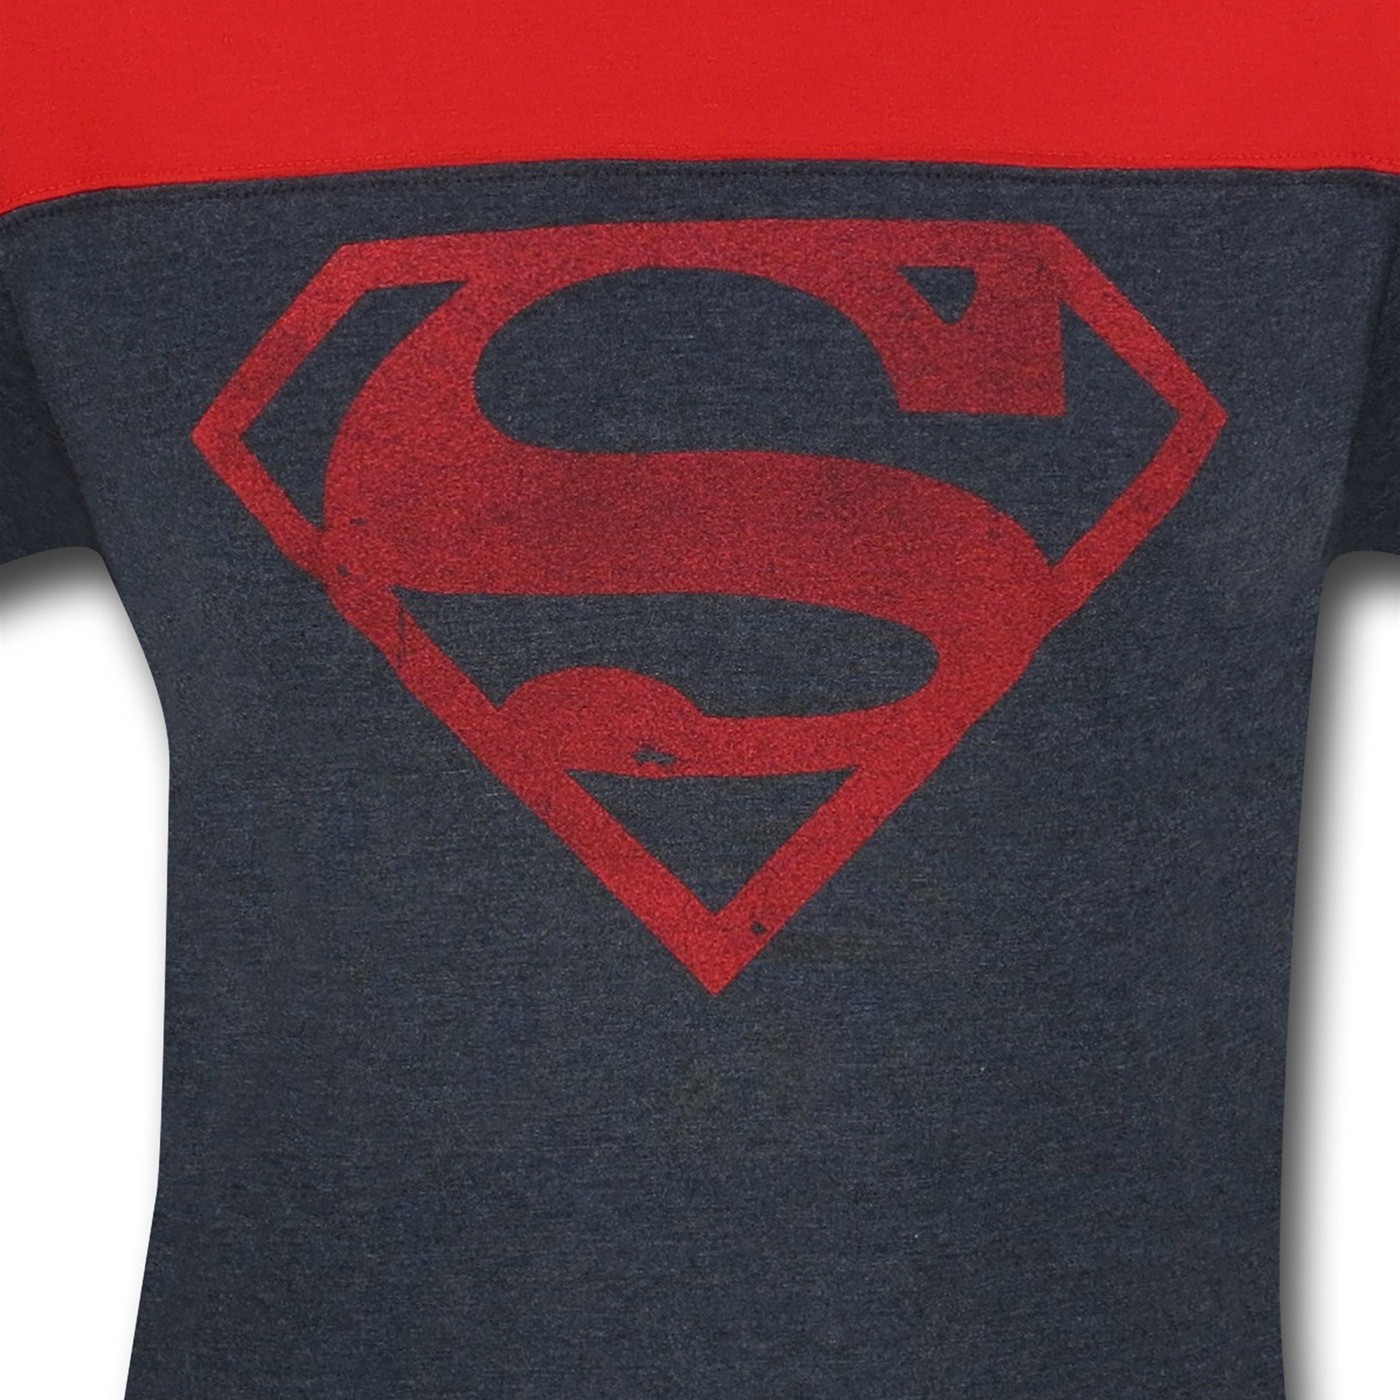 Superboy Symbol Distressed Athletic T-Shirt